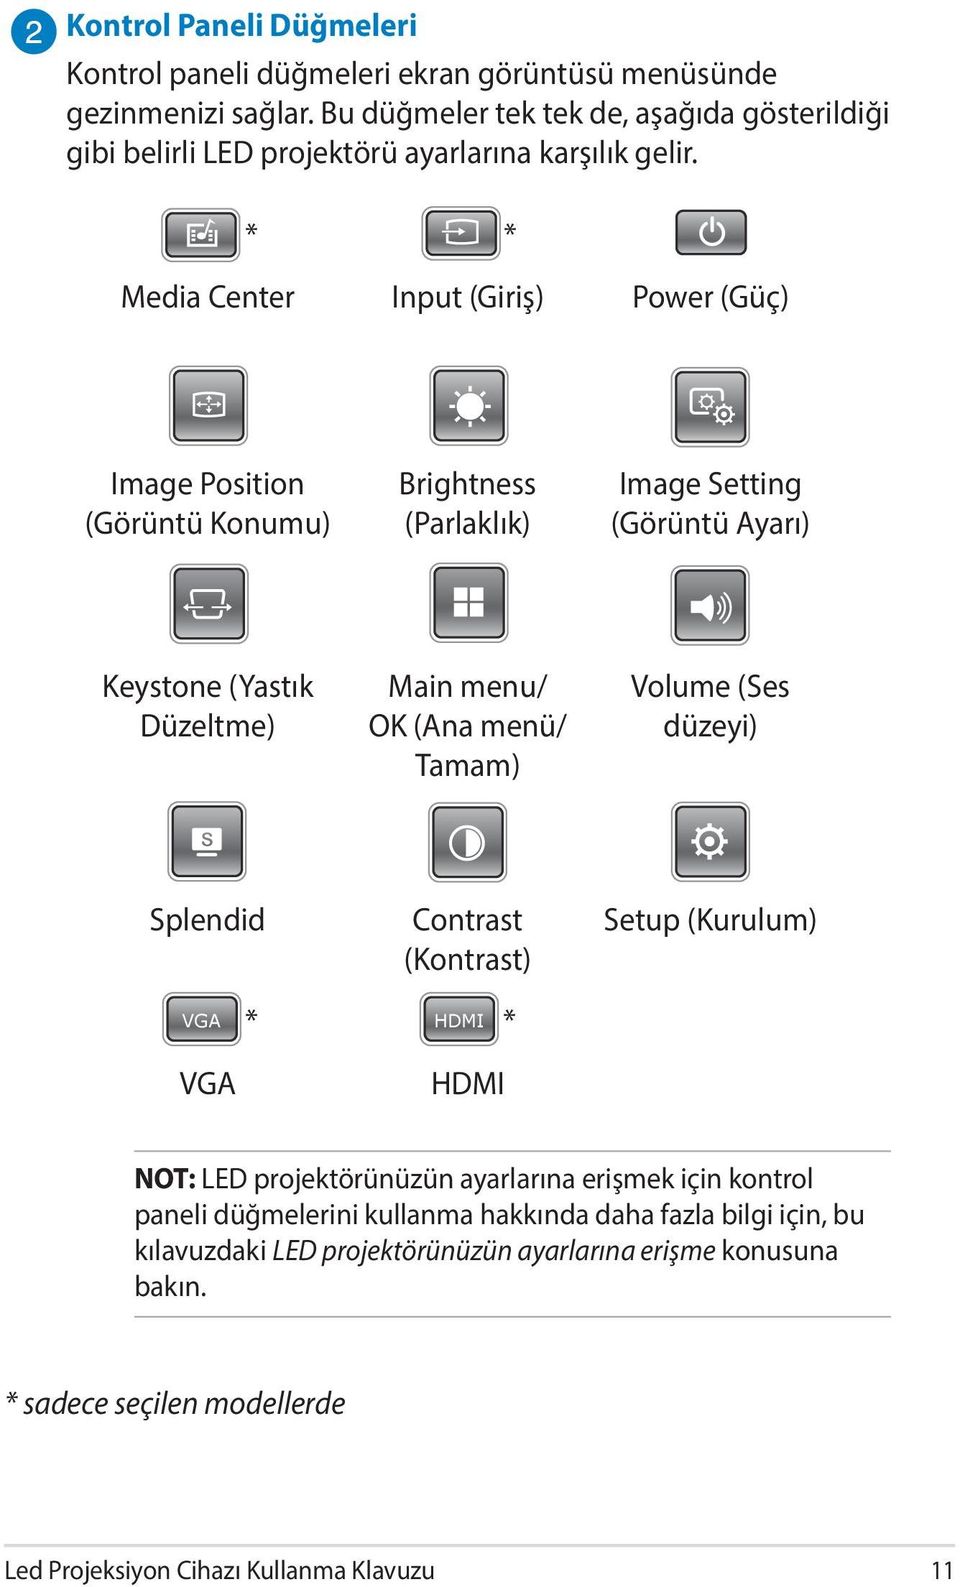 Ayarı) VGA HDMI VGA HDMIVGA HDMI Keystone (Yastık Düzeltme) Main menu/ OK (Ana menü/ Tamam) Volume (Ses düzeyi) Splendid VGA VGA Contrast (Kontrast) * HDMI VGA HDMI * HDMI Setup (Kurulum) NOT: LED